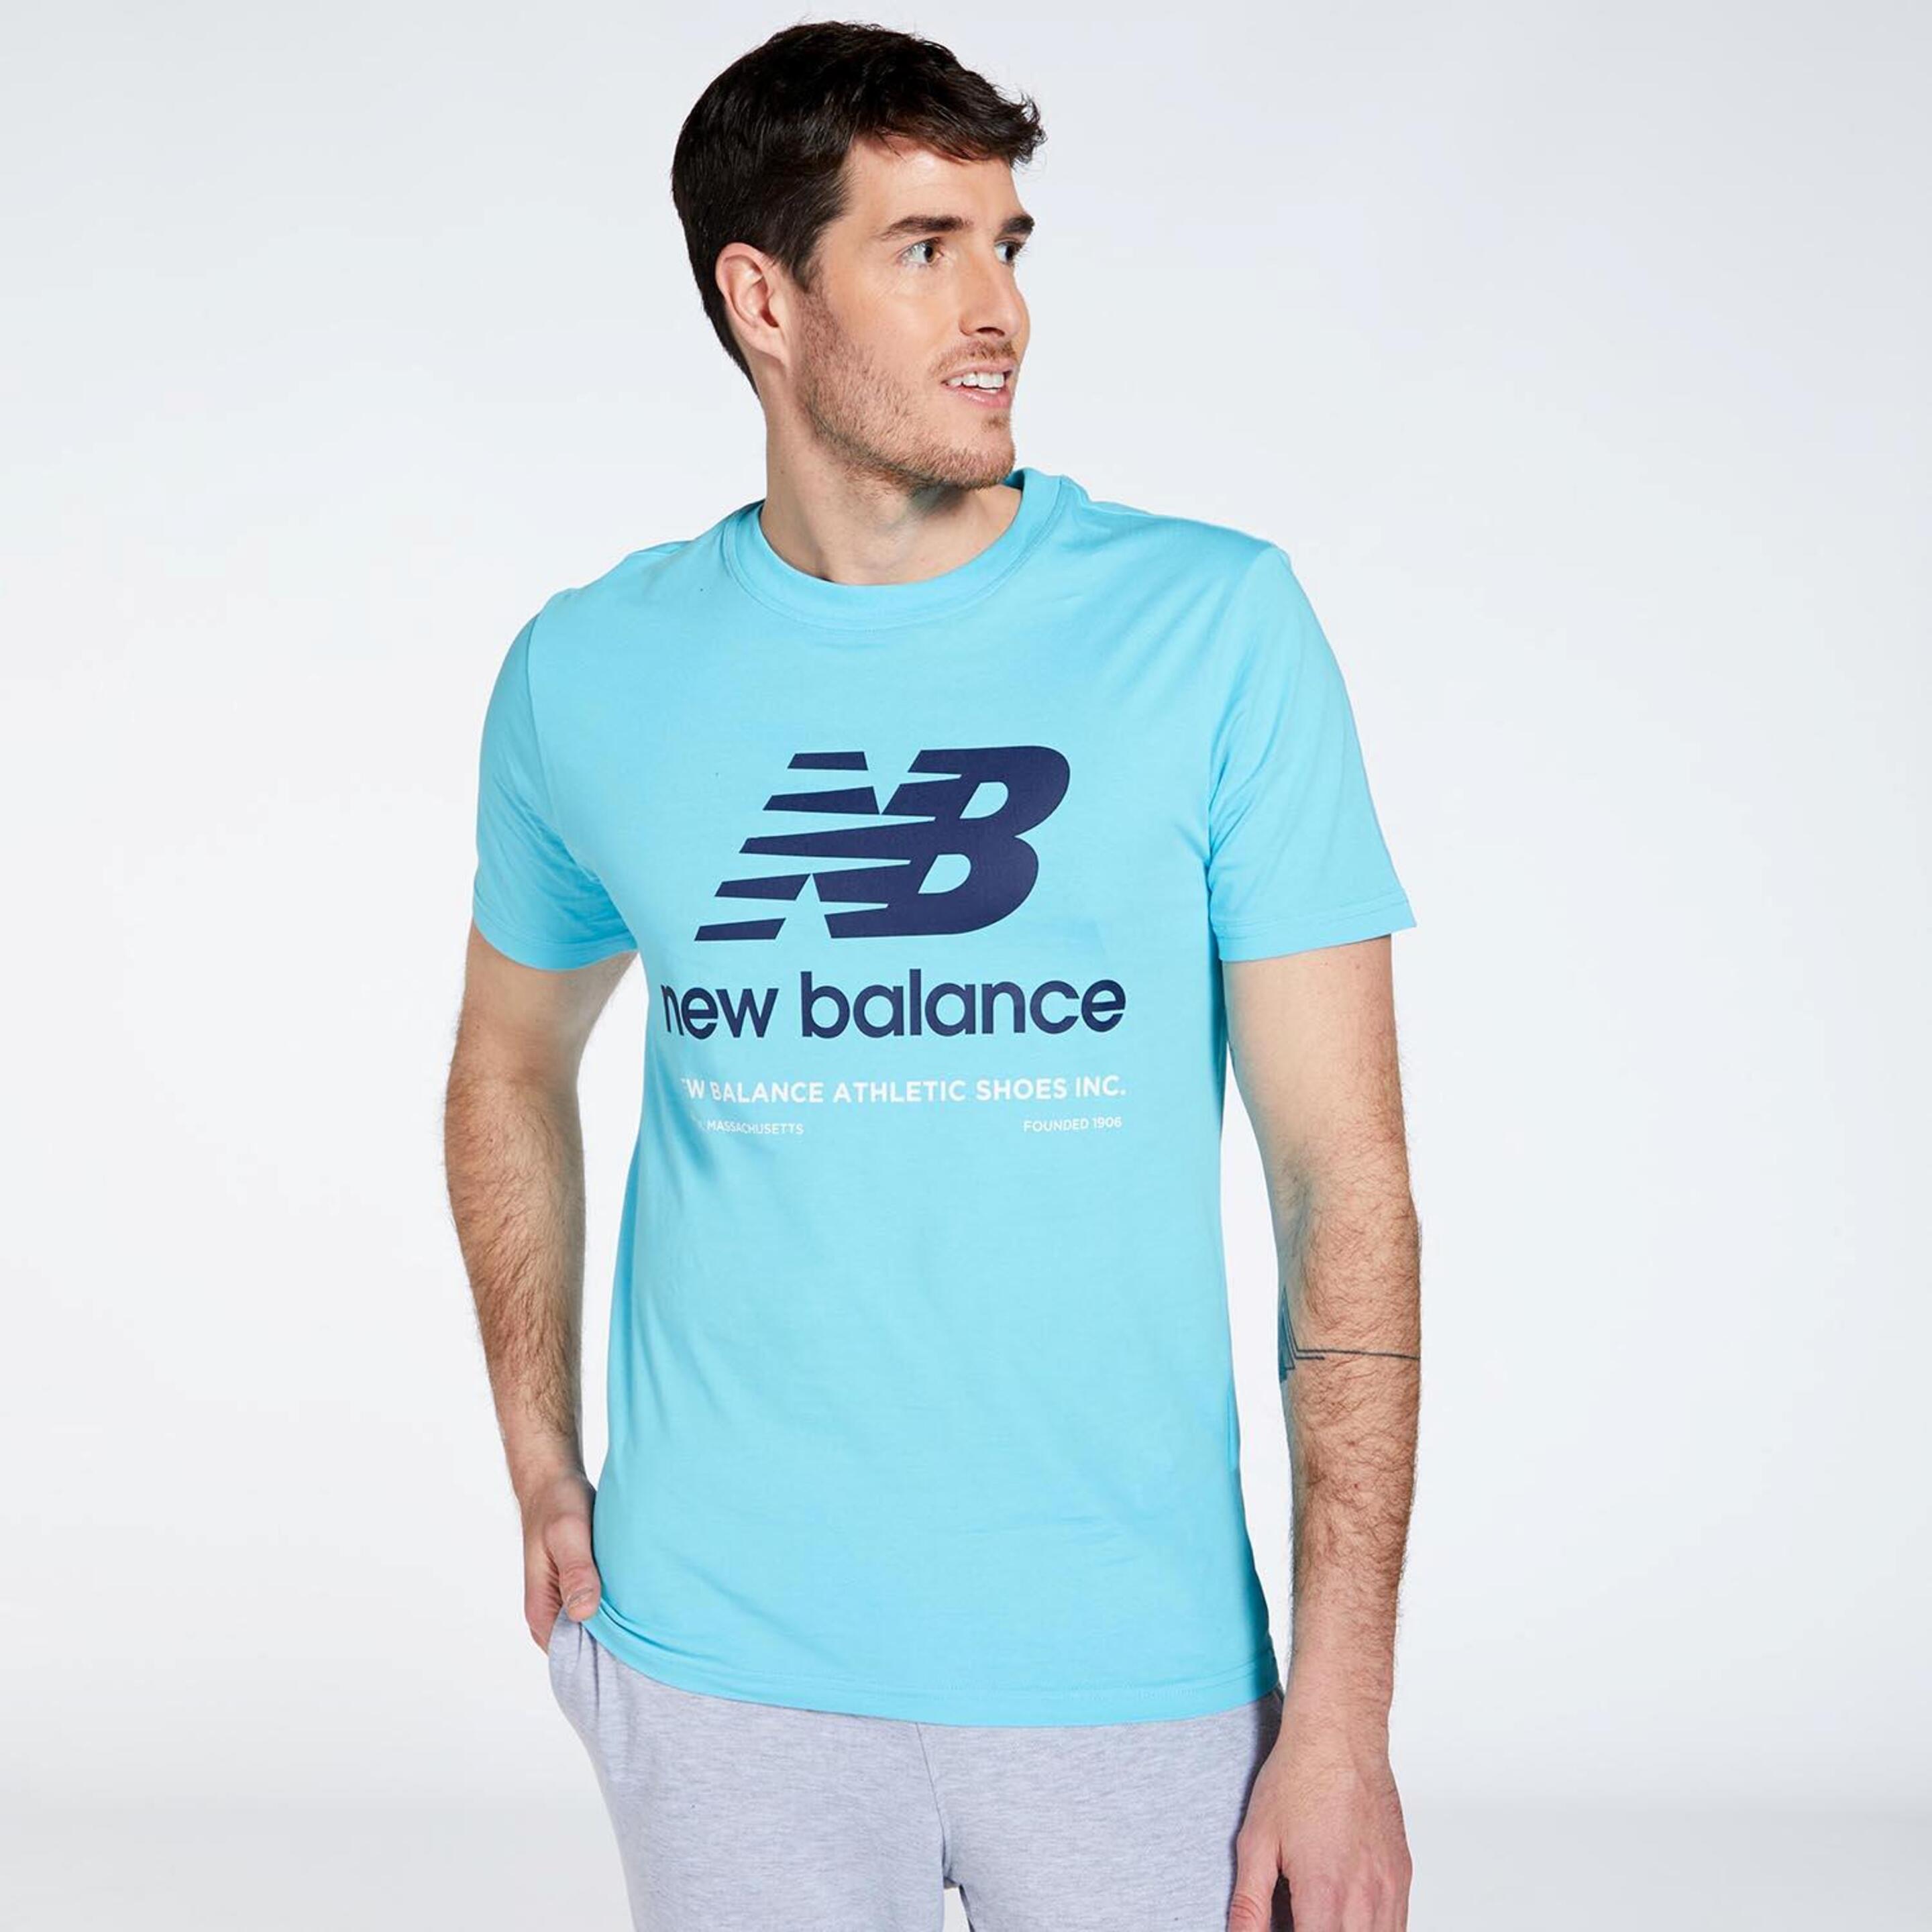 New Balance Explode - azul - Camiseta Running Hombre